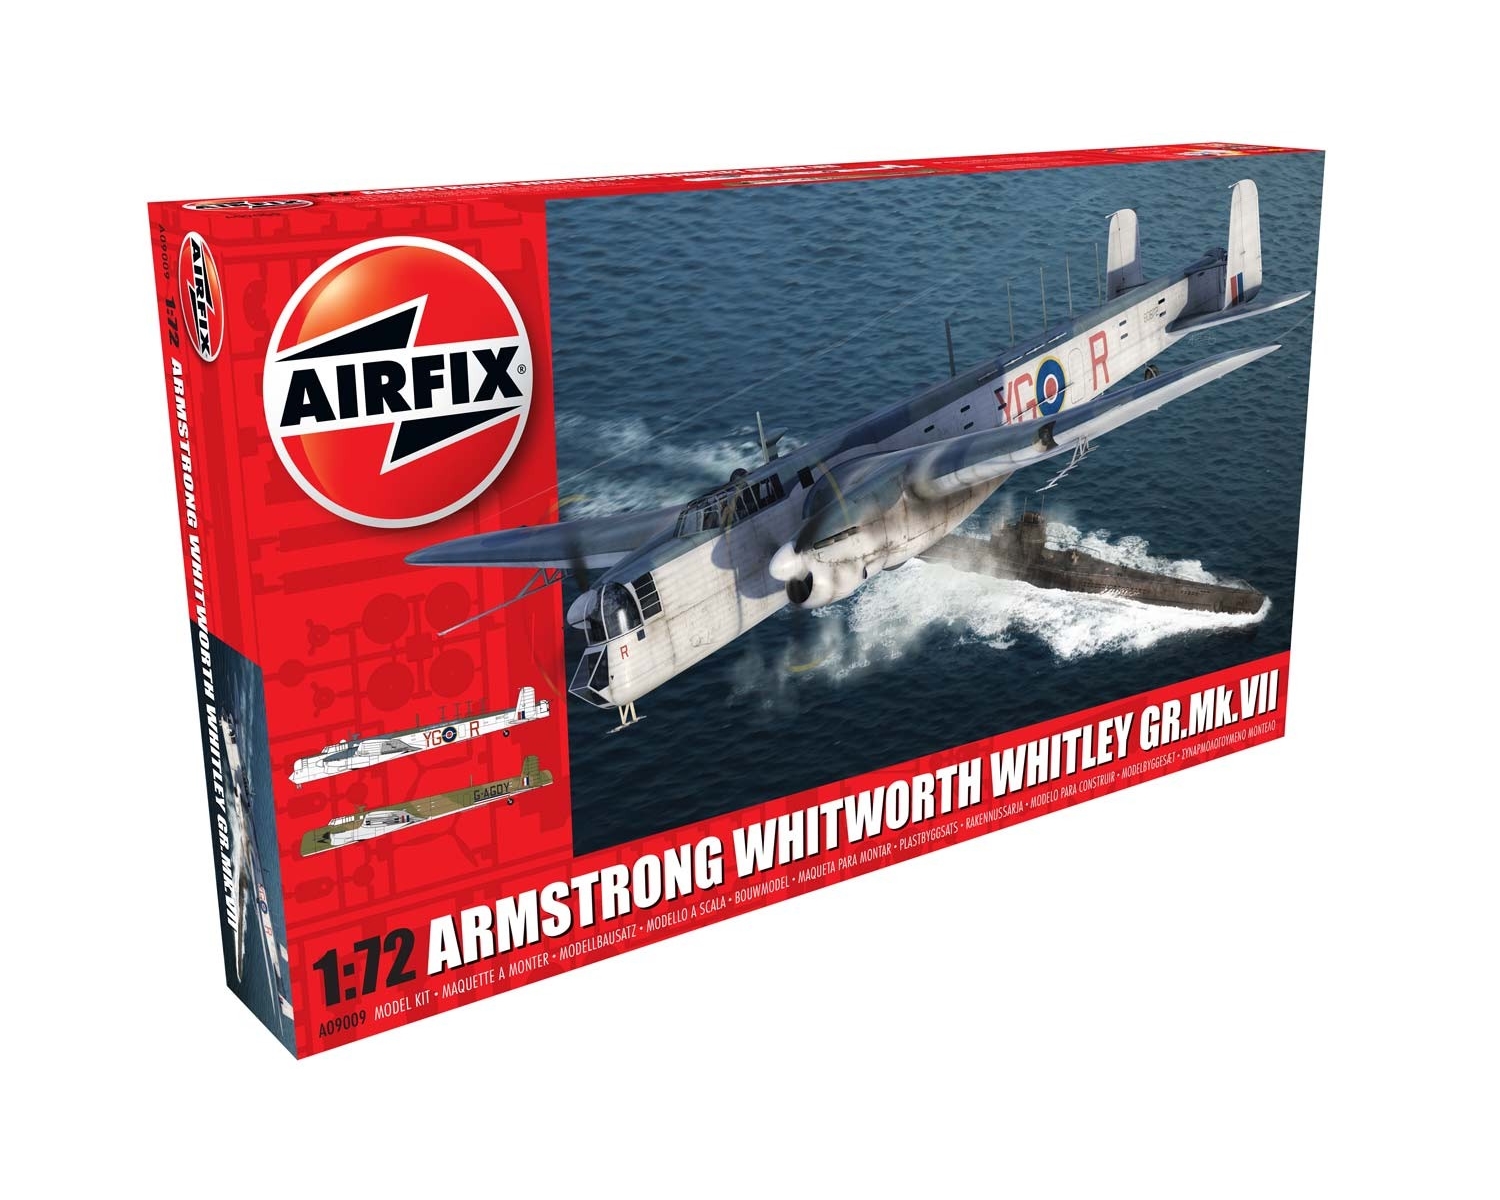 Airfix 09009 - ARMSTRONG WHITWORTH WHITLEY GR.MK.VII